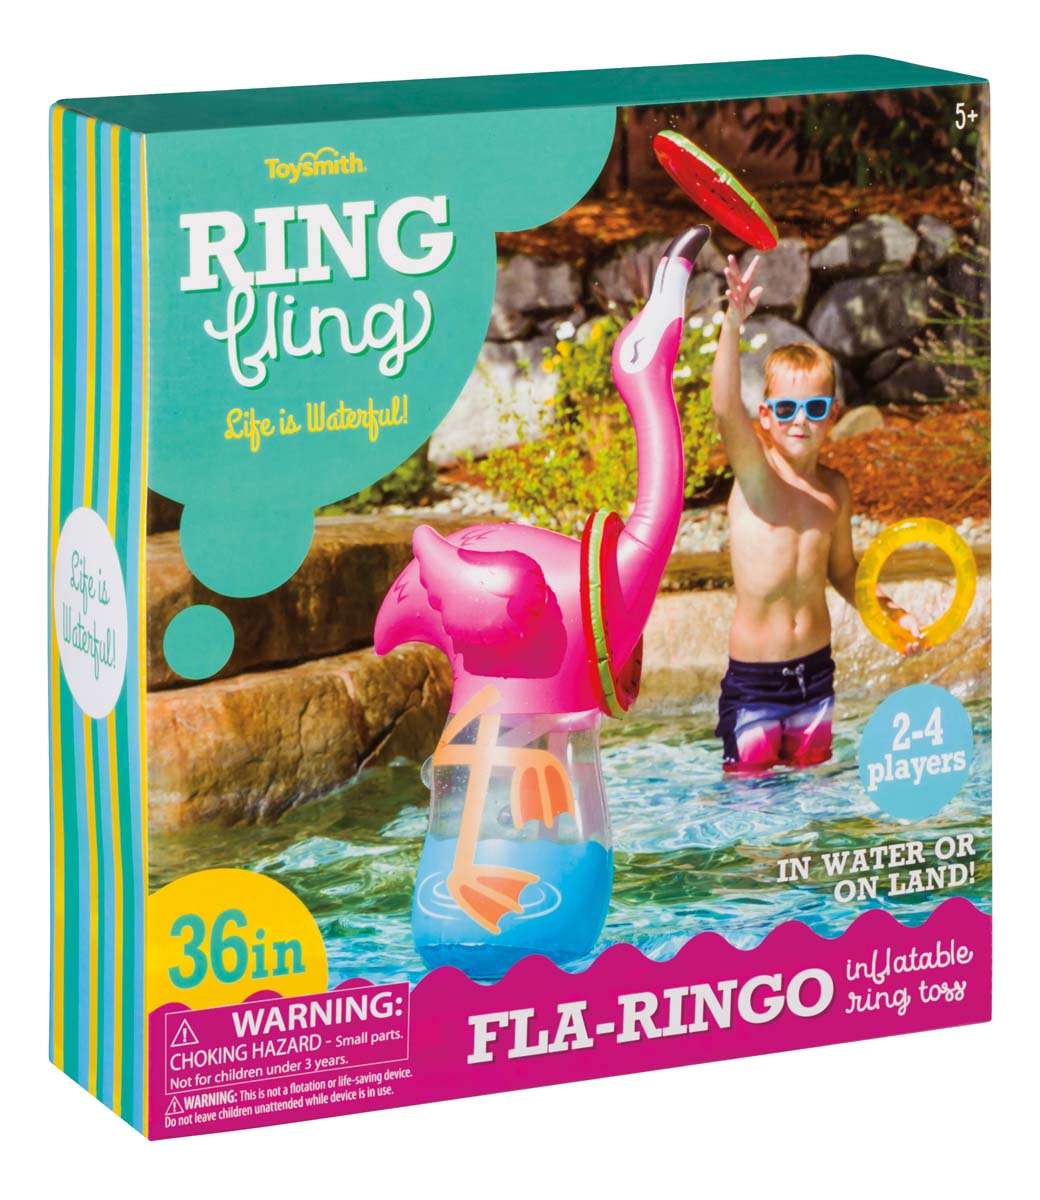 Toysmith Ring Fling Fla-Ringo